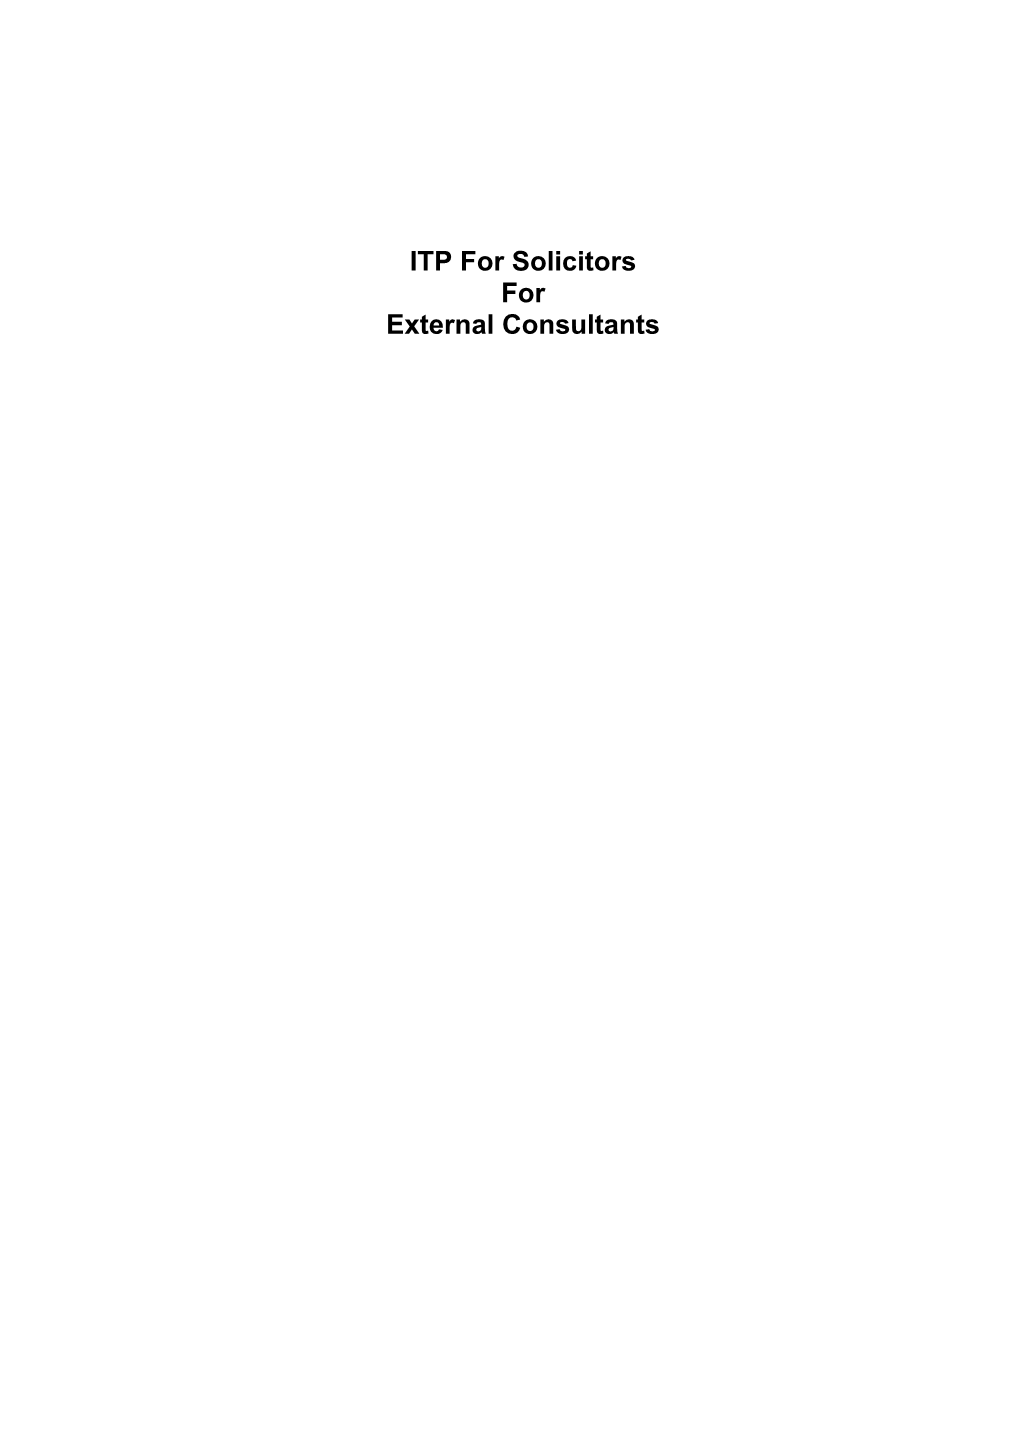 MN - ITP Solicitors External